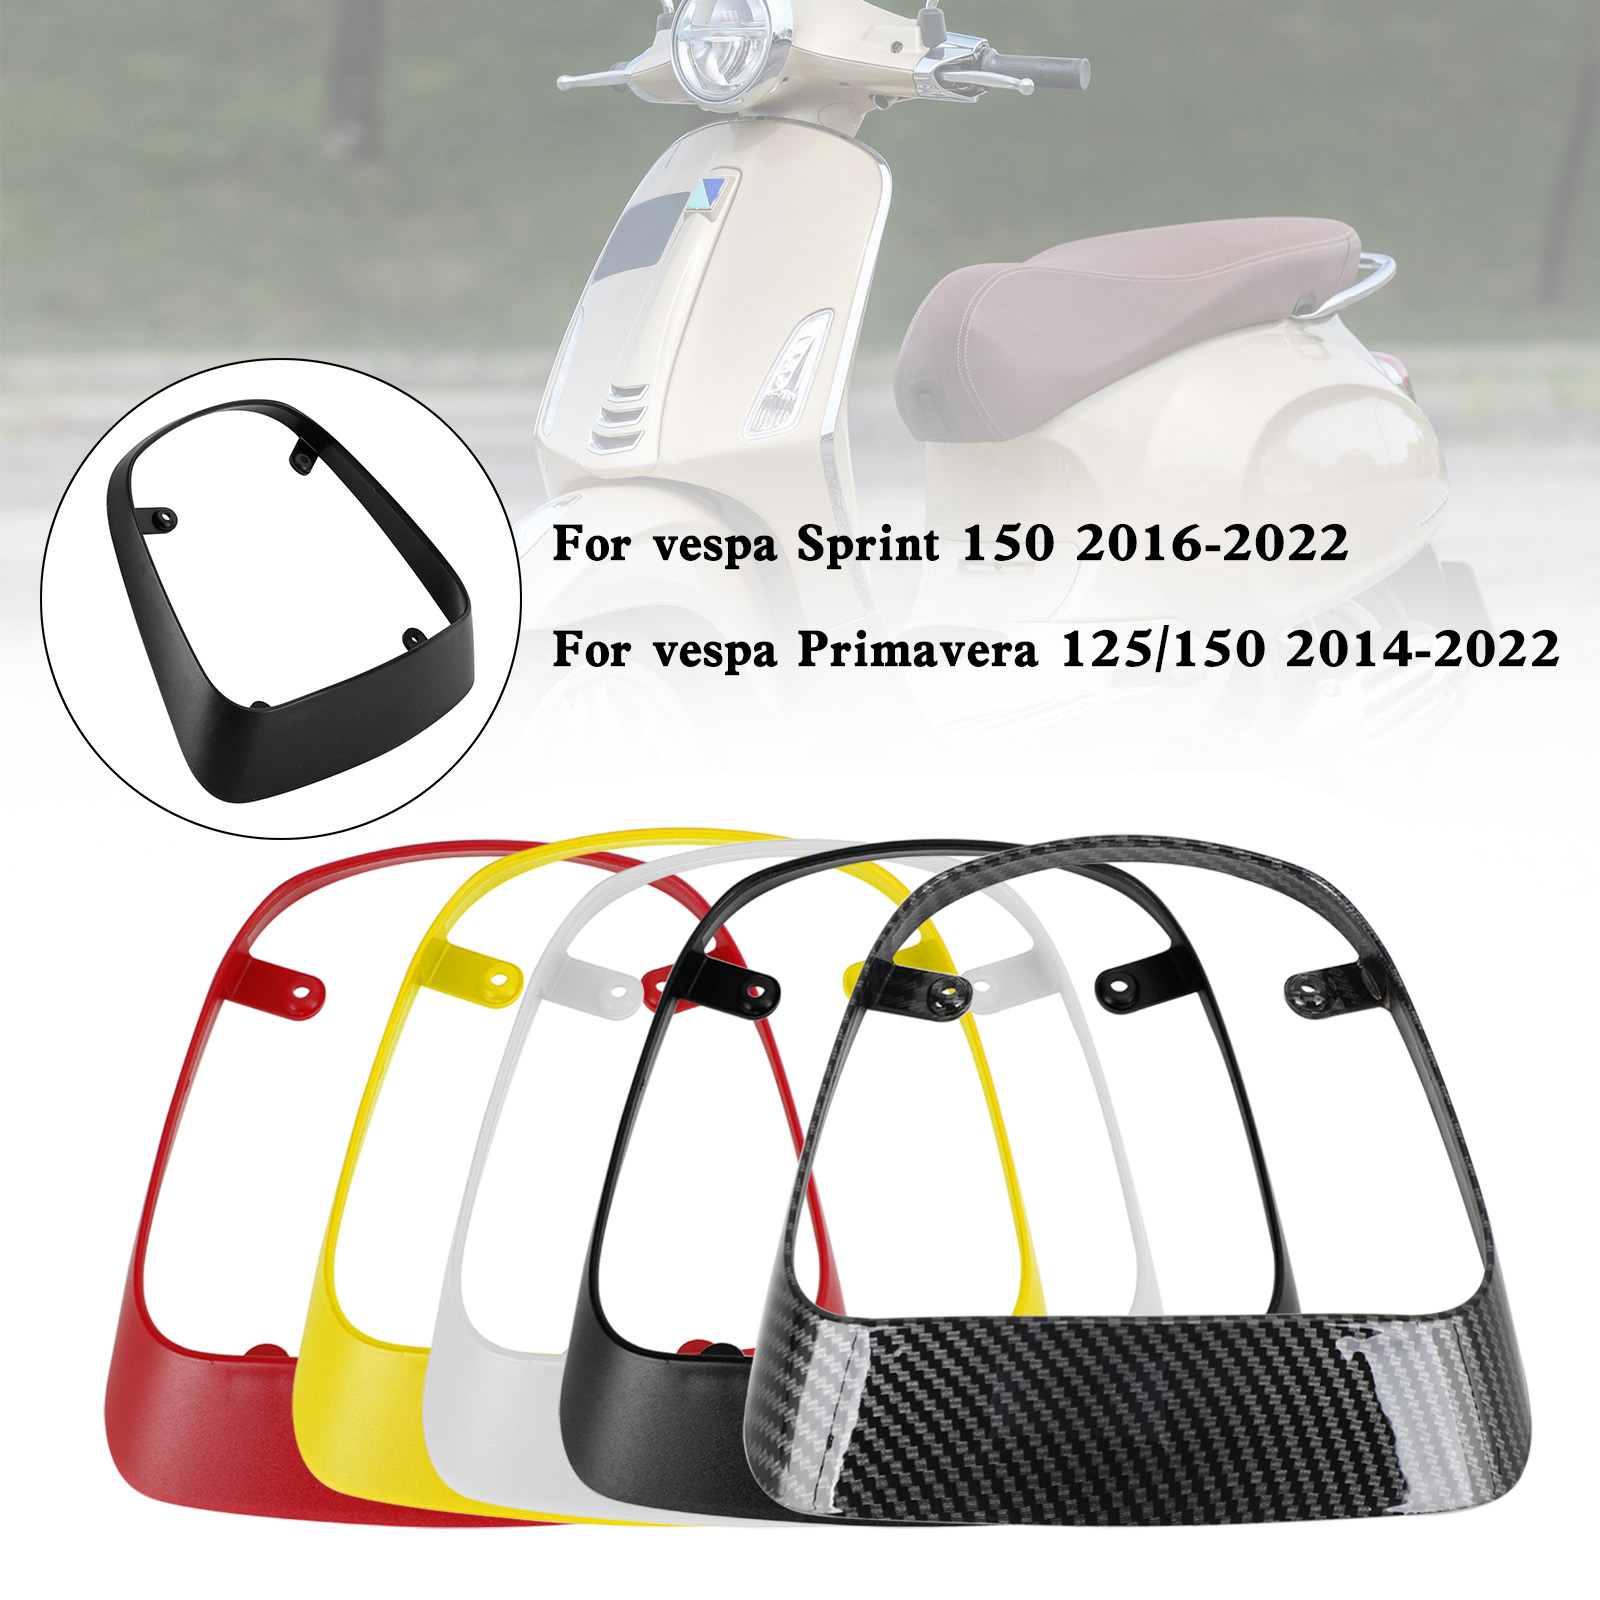 Sprint Primavera 125/150 2014-2022 尾燈飾框-極限超快感